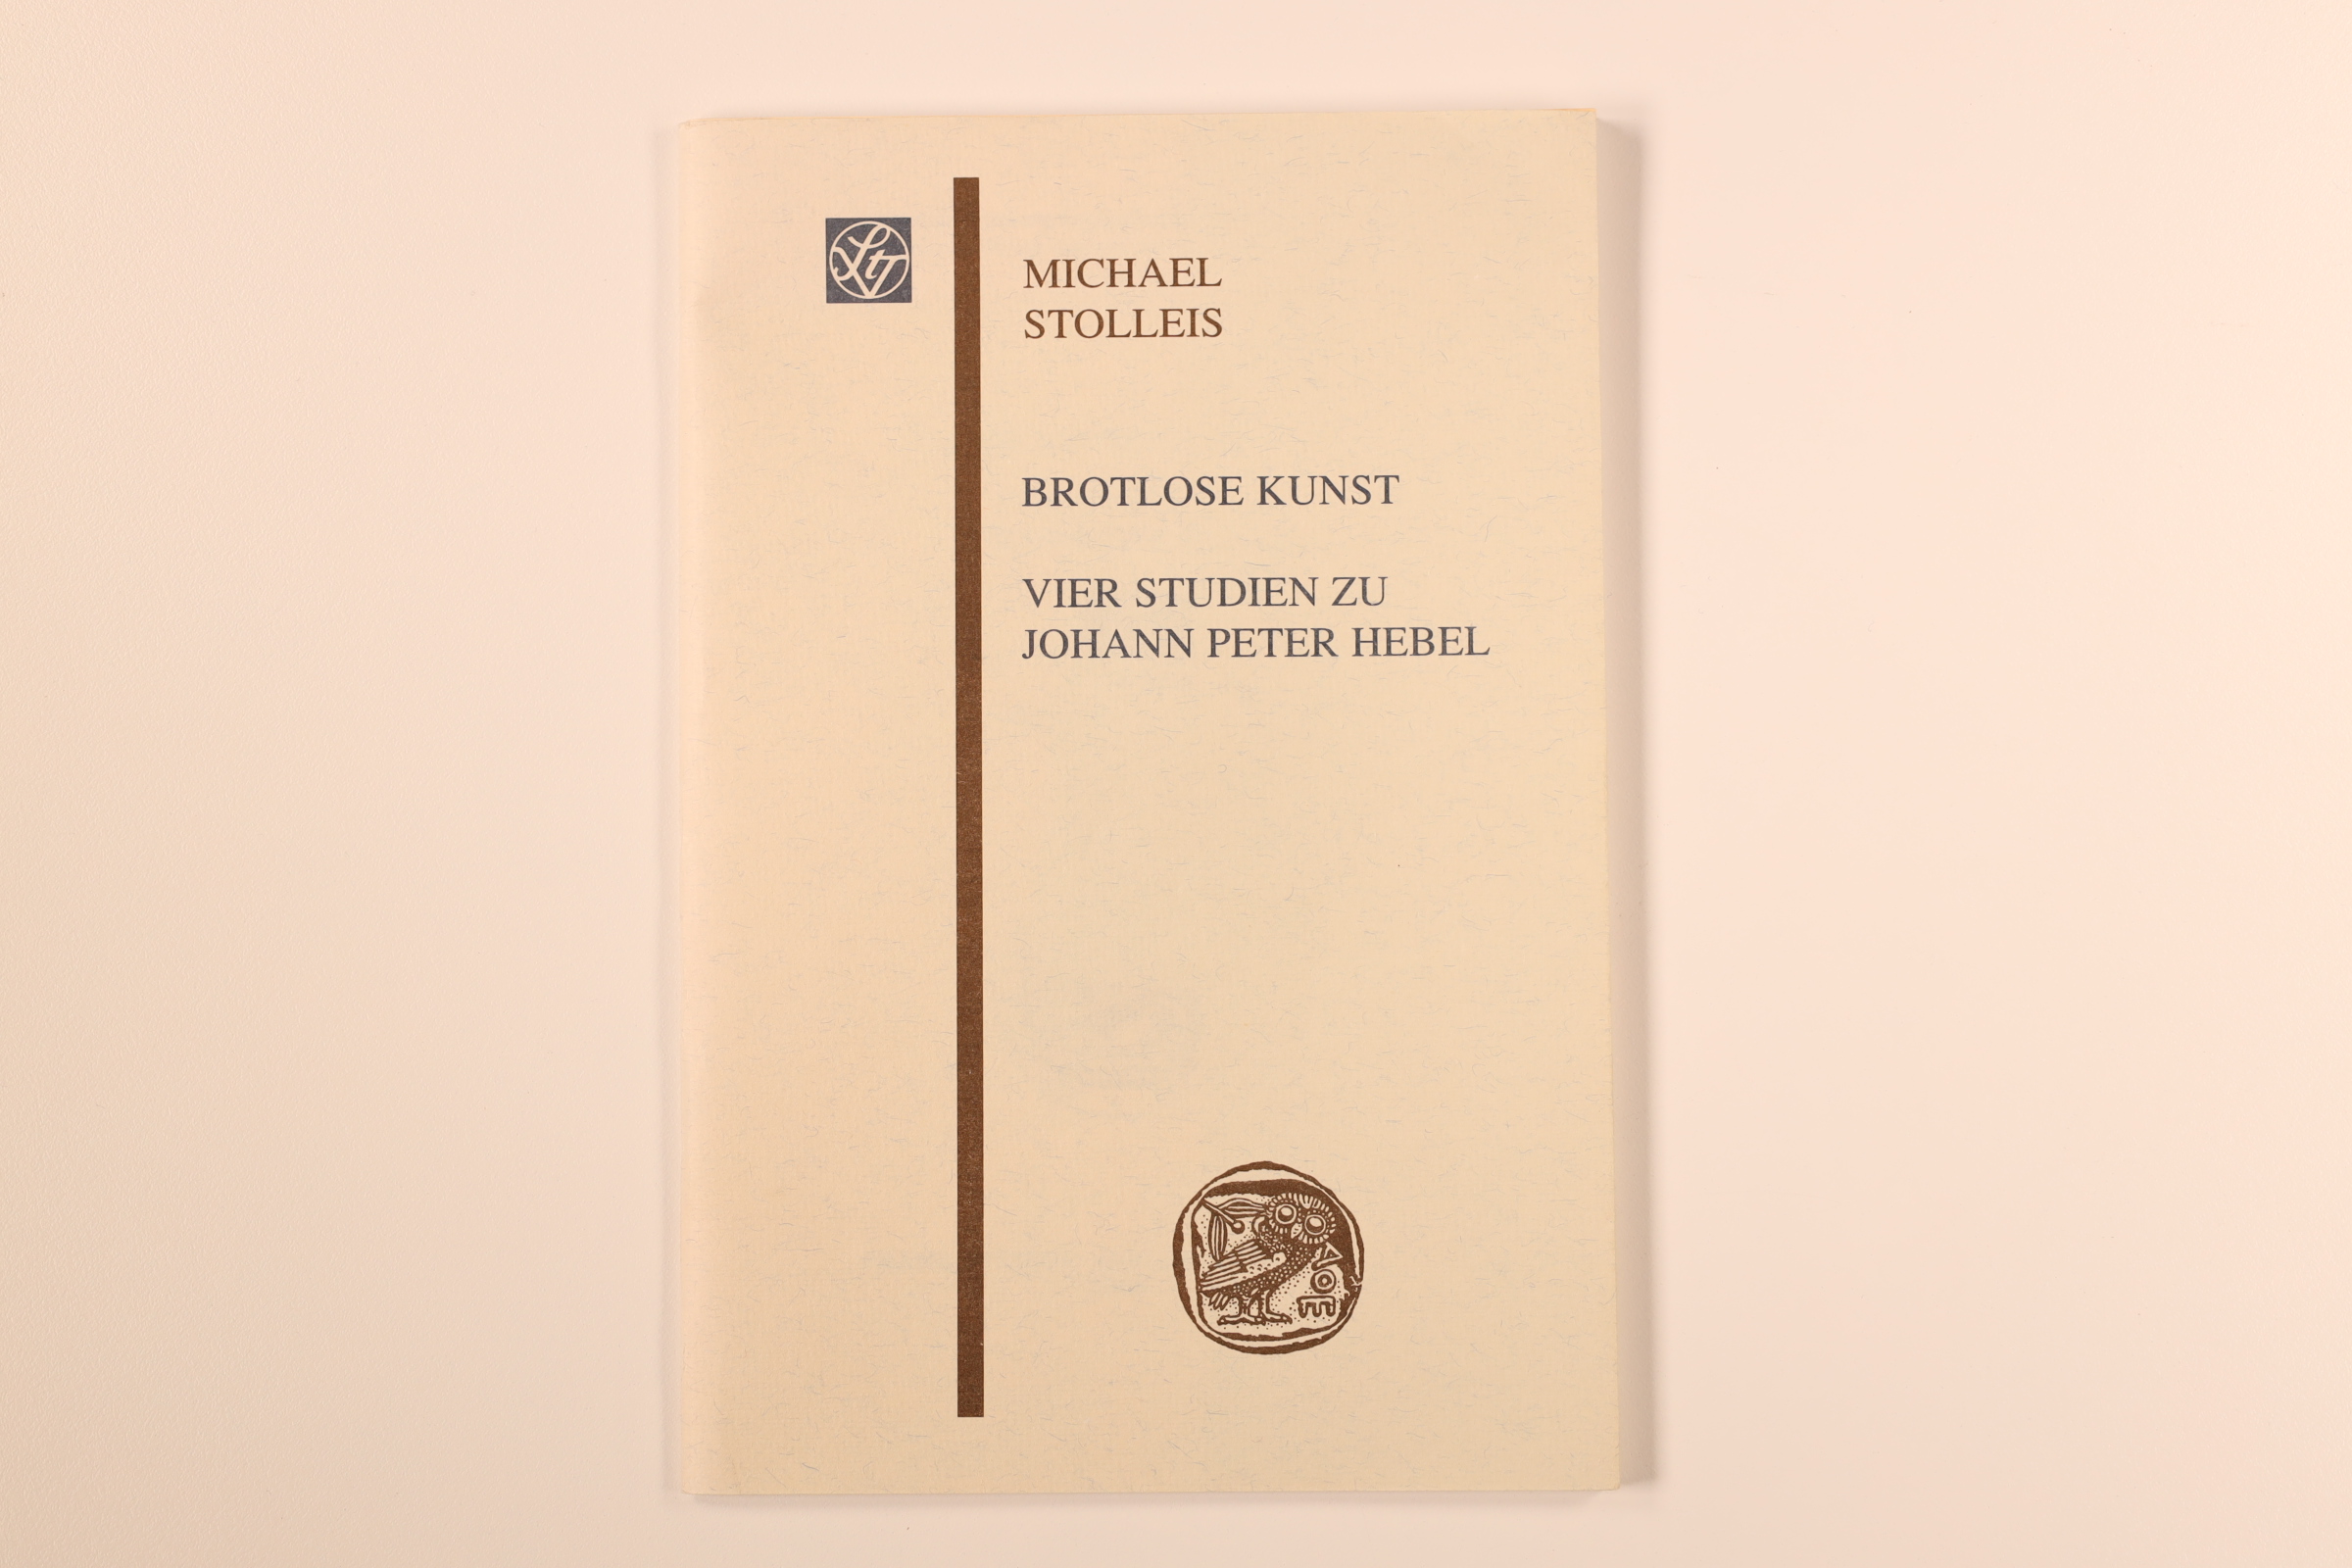 BROTLOSE KUNST. Vier Studien zu Johann Peter Hebel - Stolleis, Michael